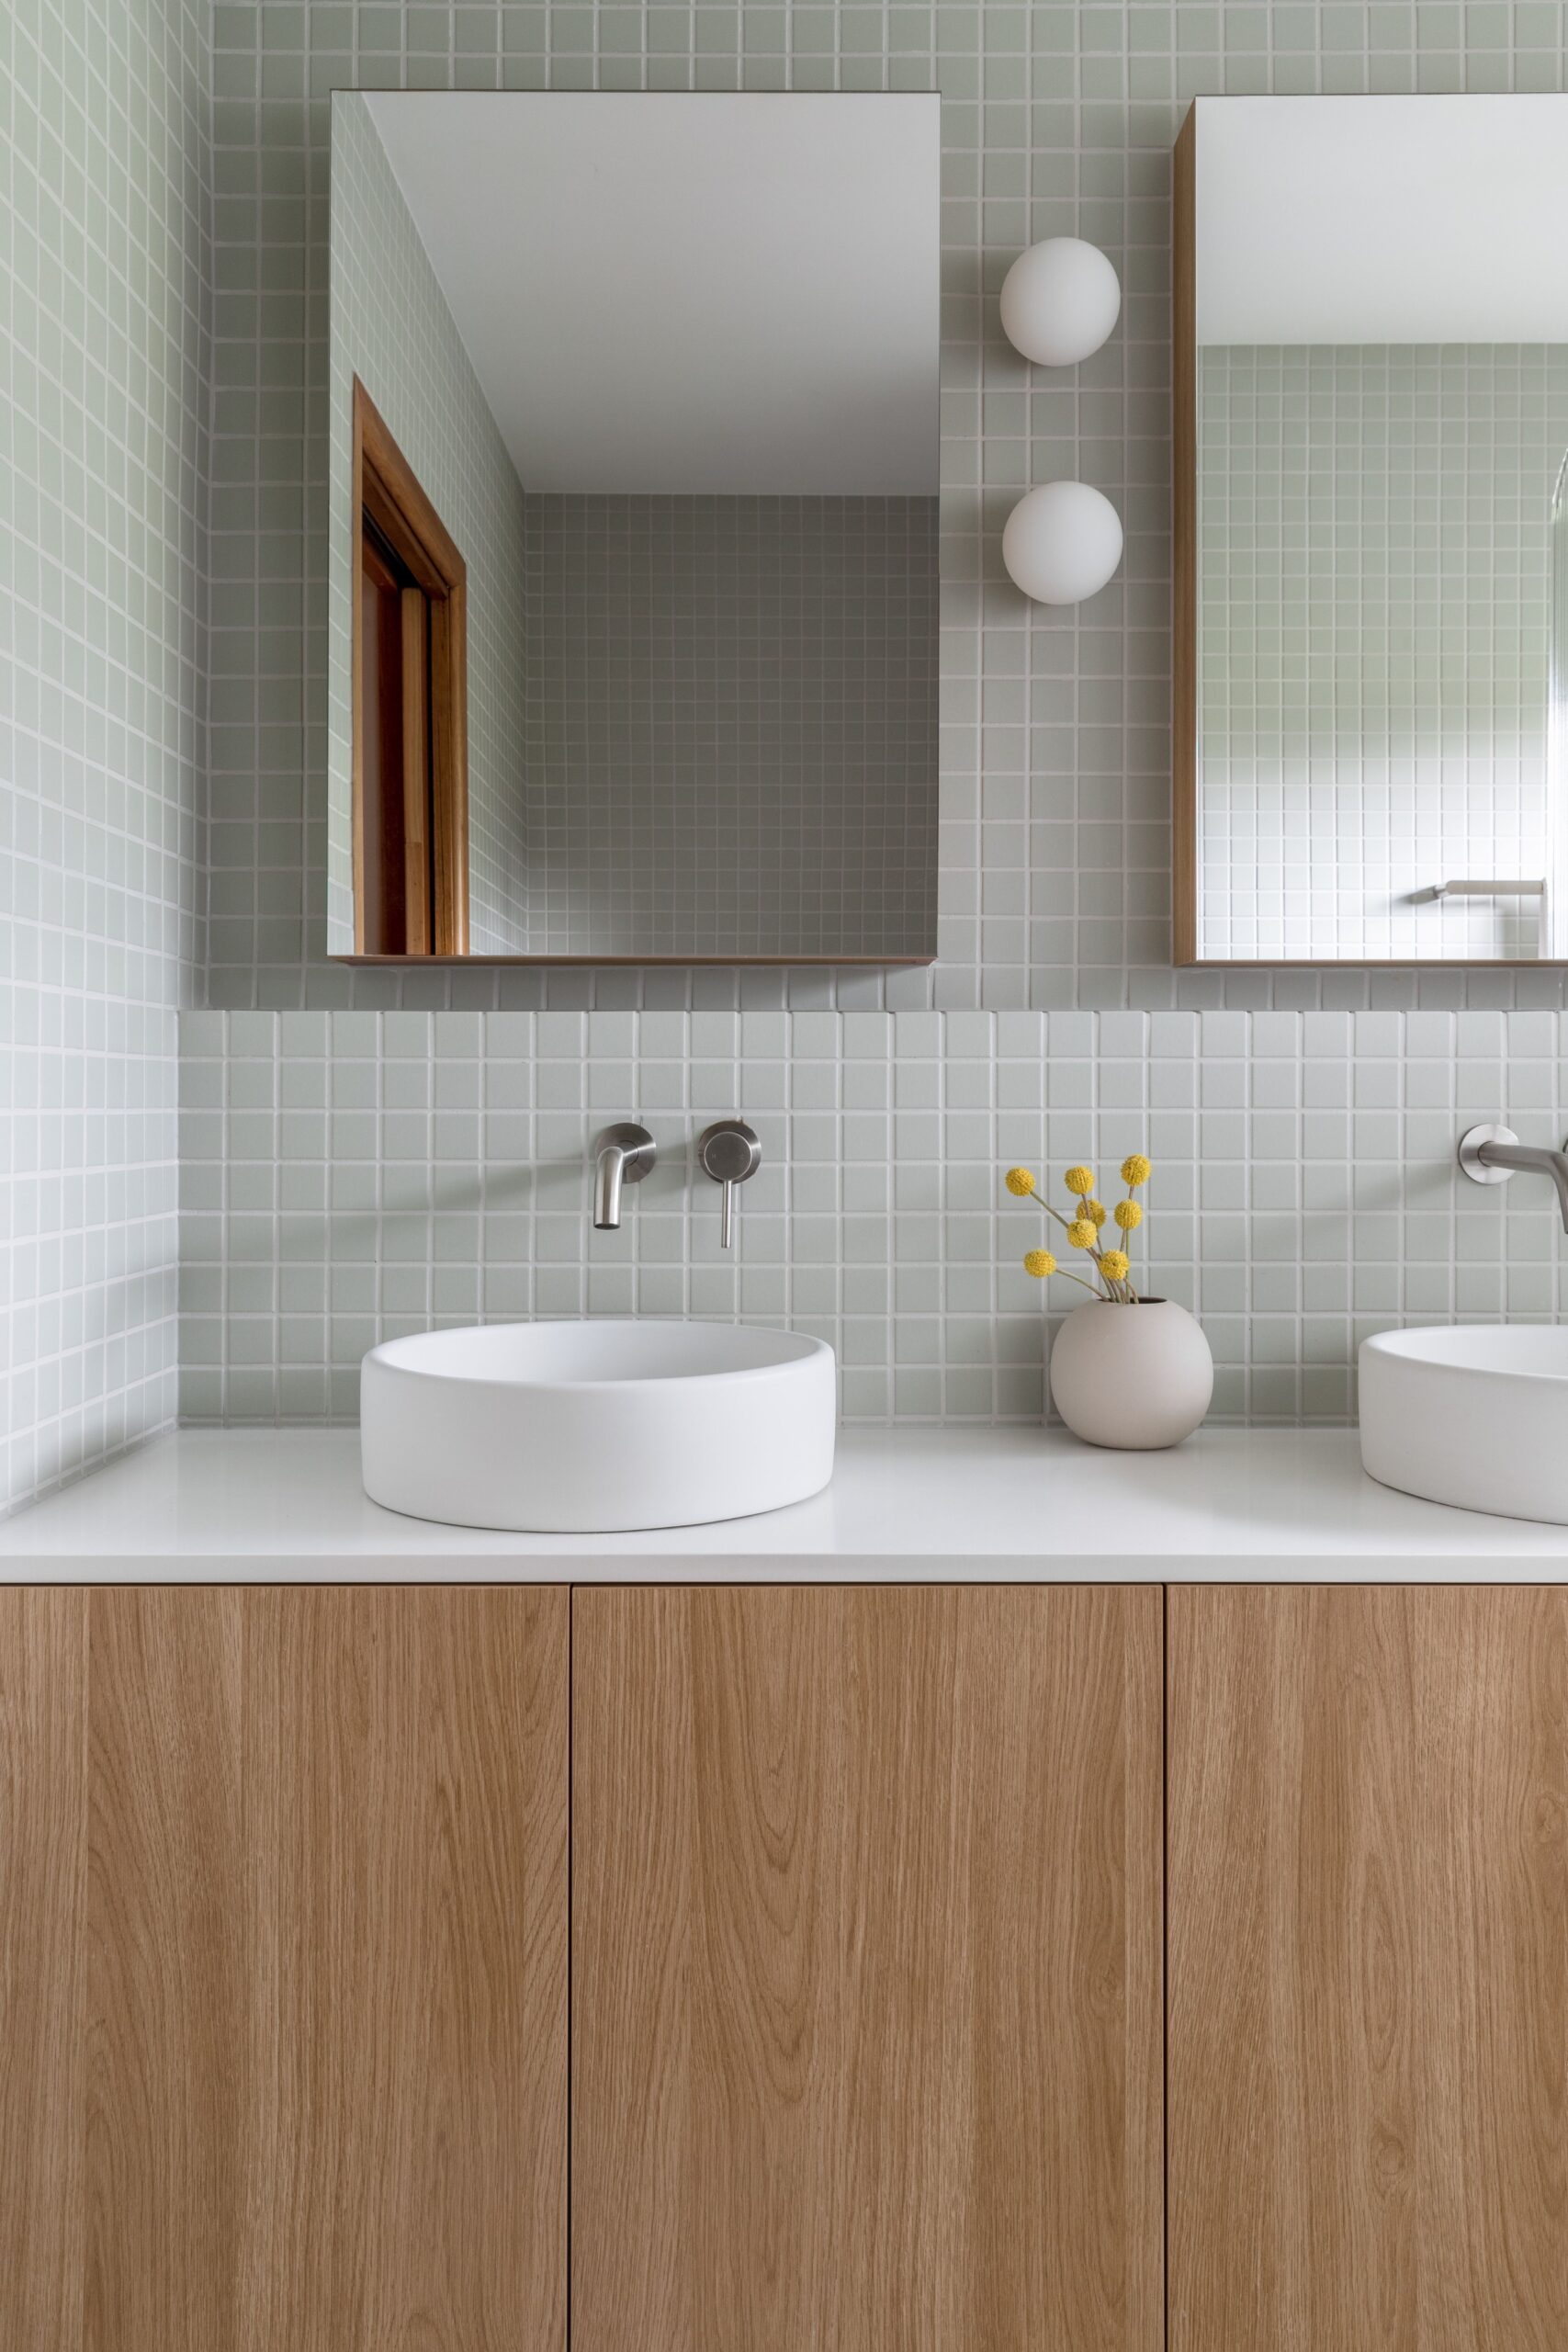 Bathroom vanity, a modern outlook to a
  bathroom